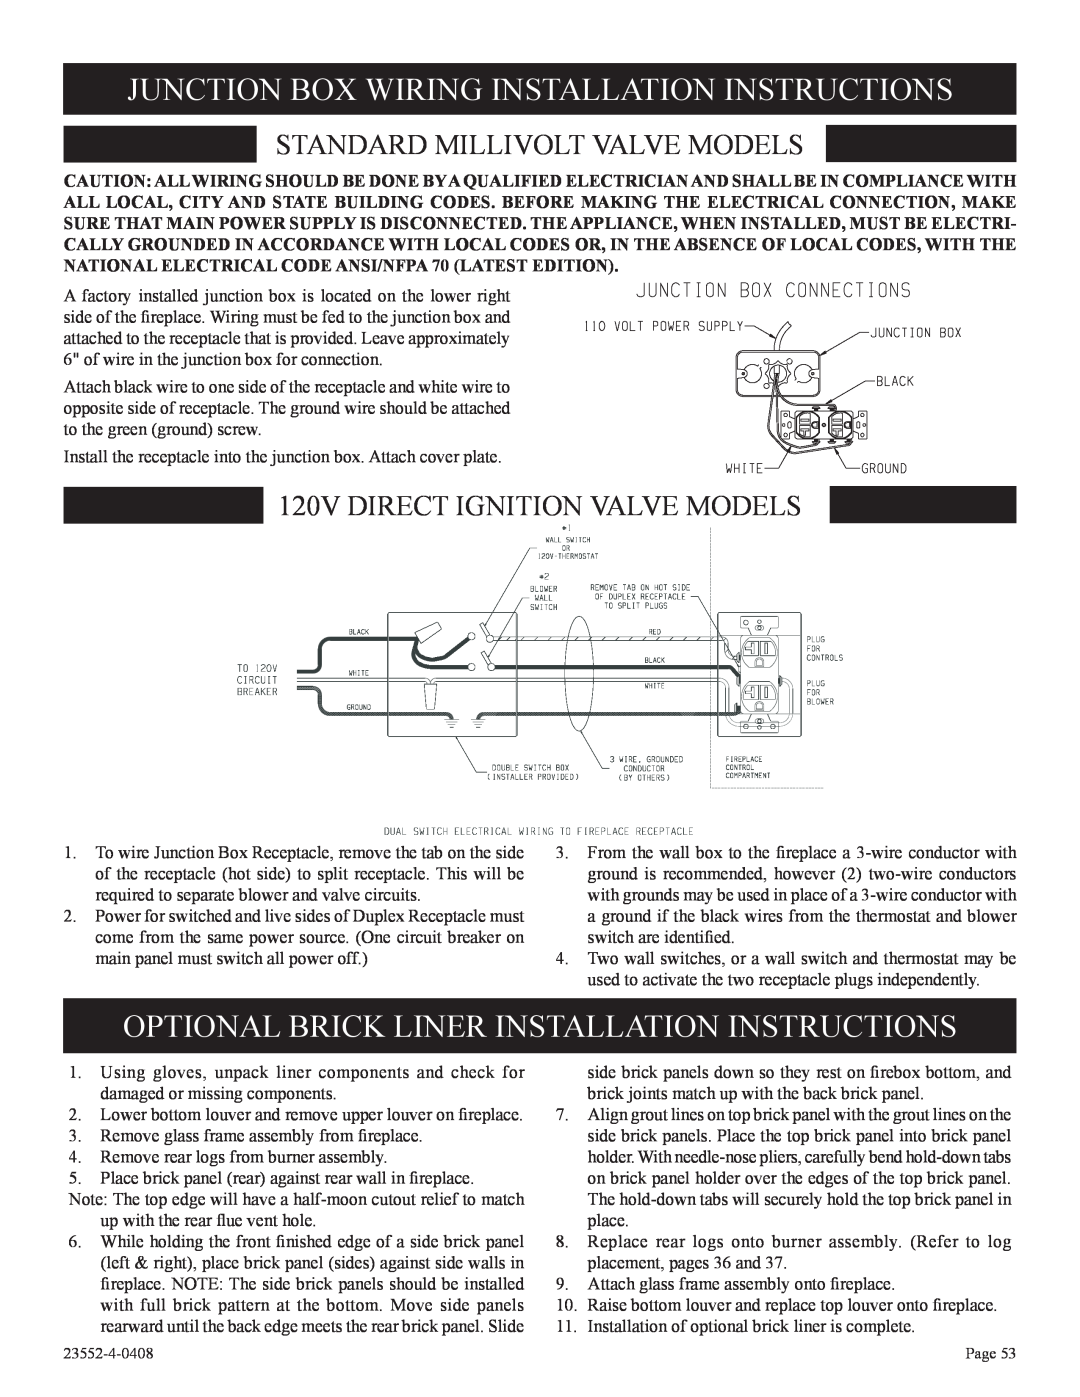 Empire Comfort Systems 2, 1 Junction Box Wiring Installation Instructions, Optional Brick Liner Installation Instructions 